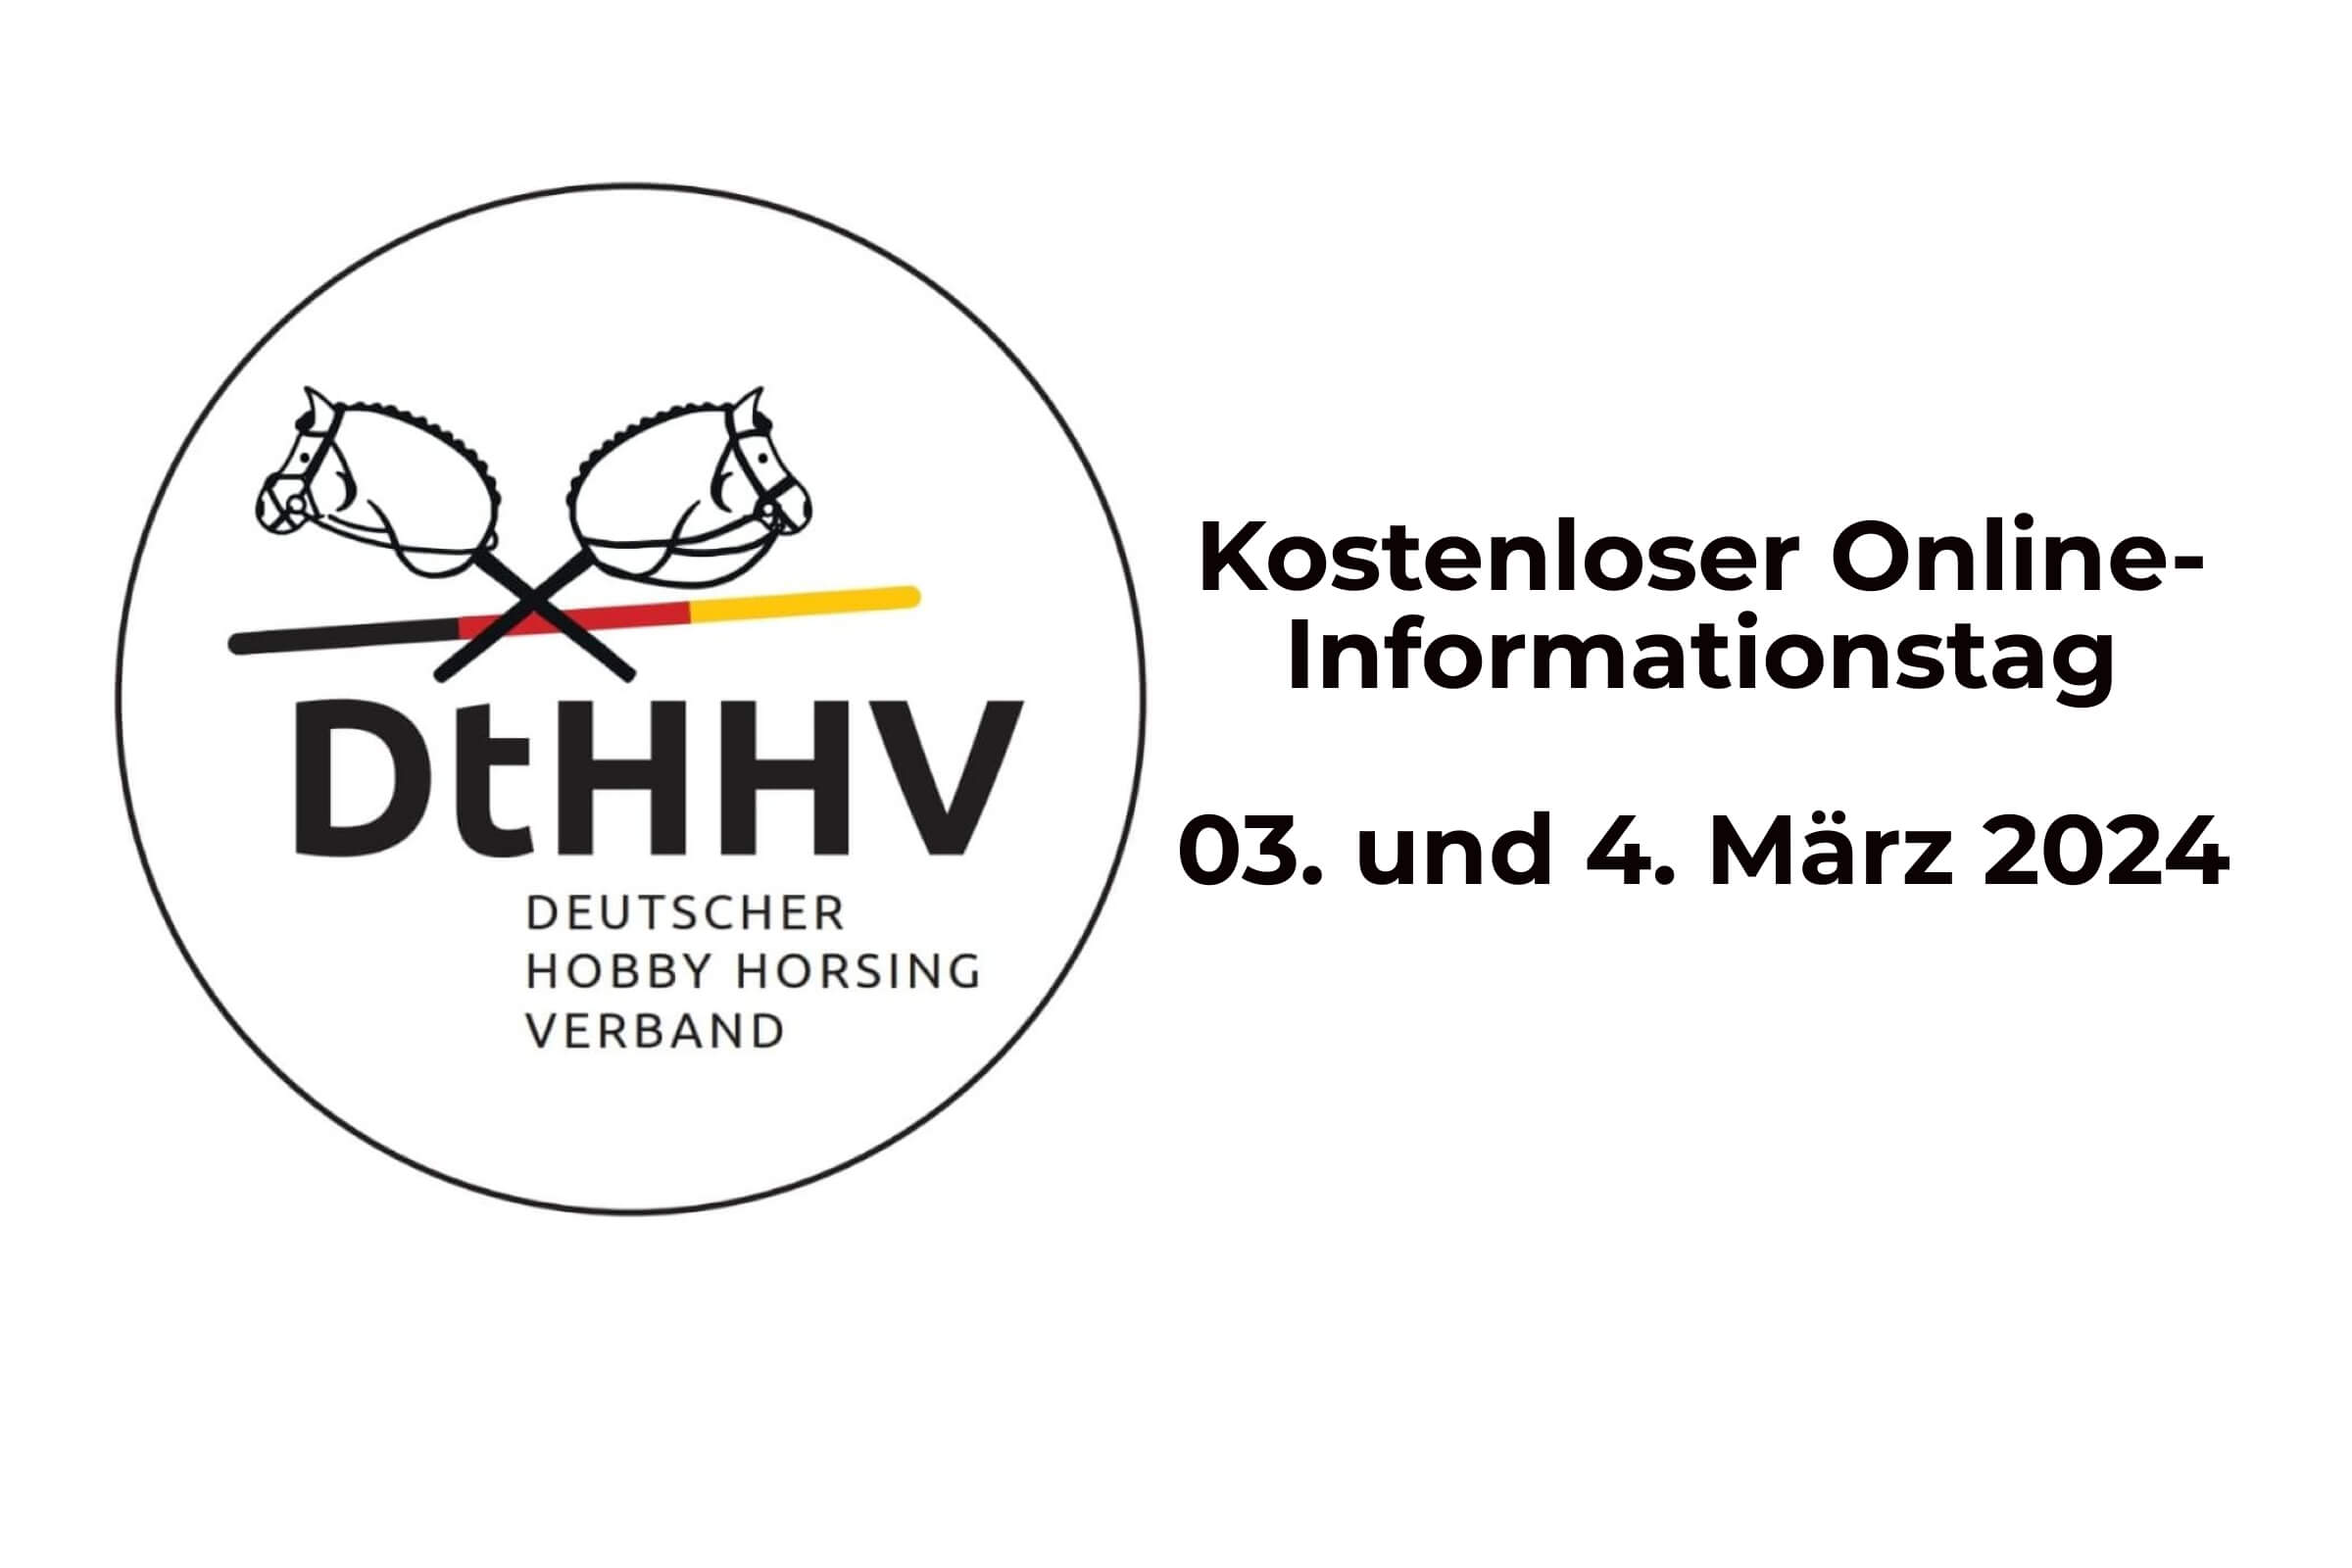 DtHHV Informationstag - Logo und Datum